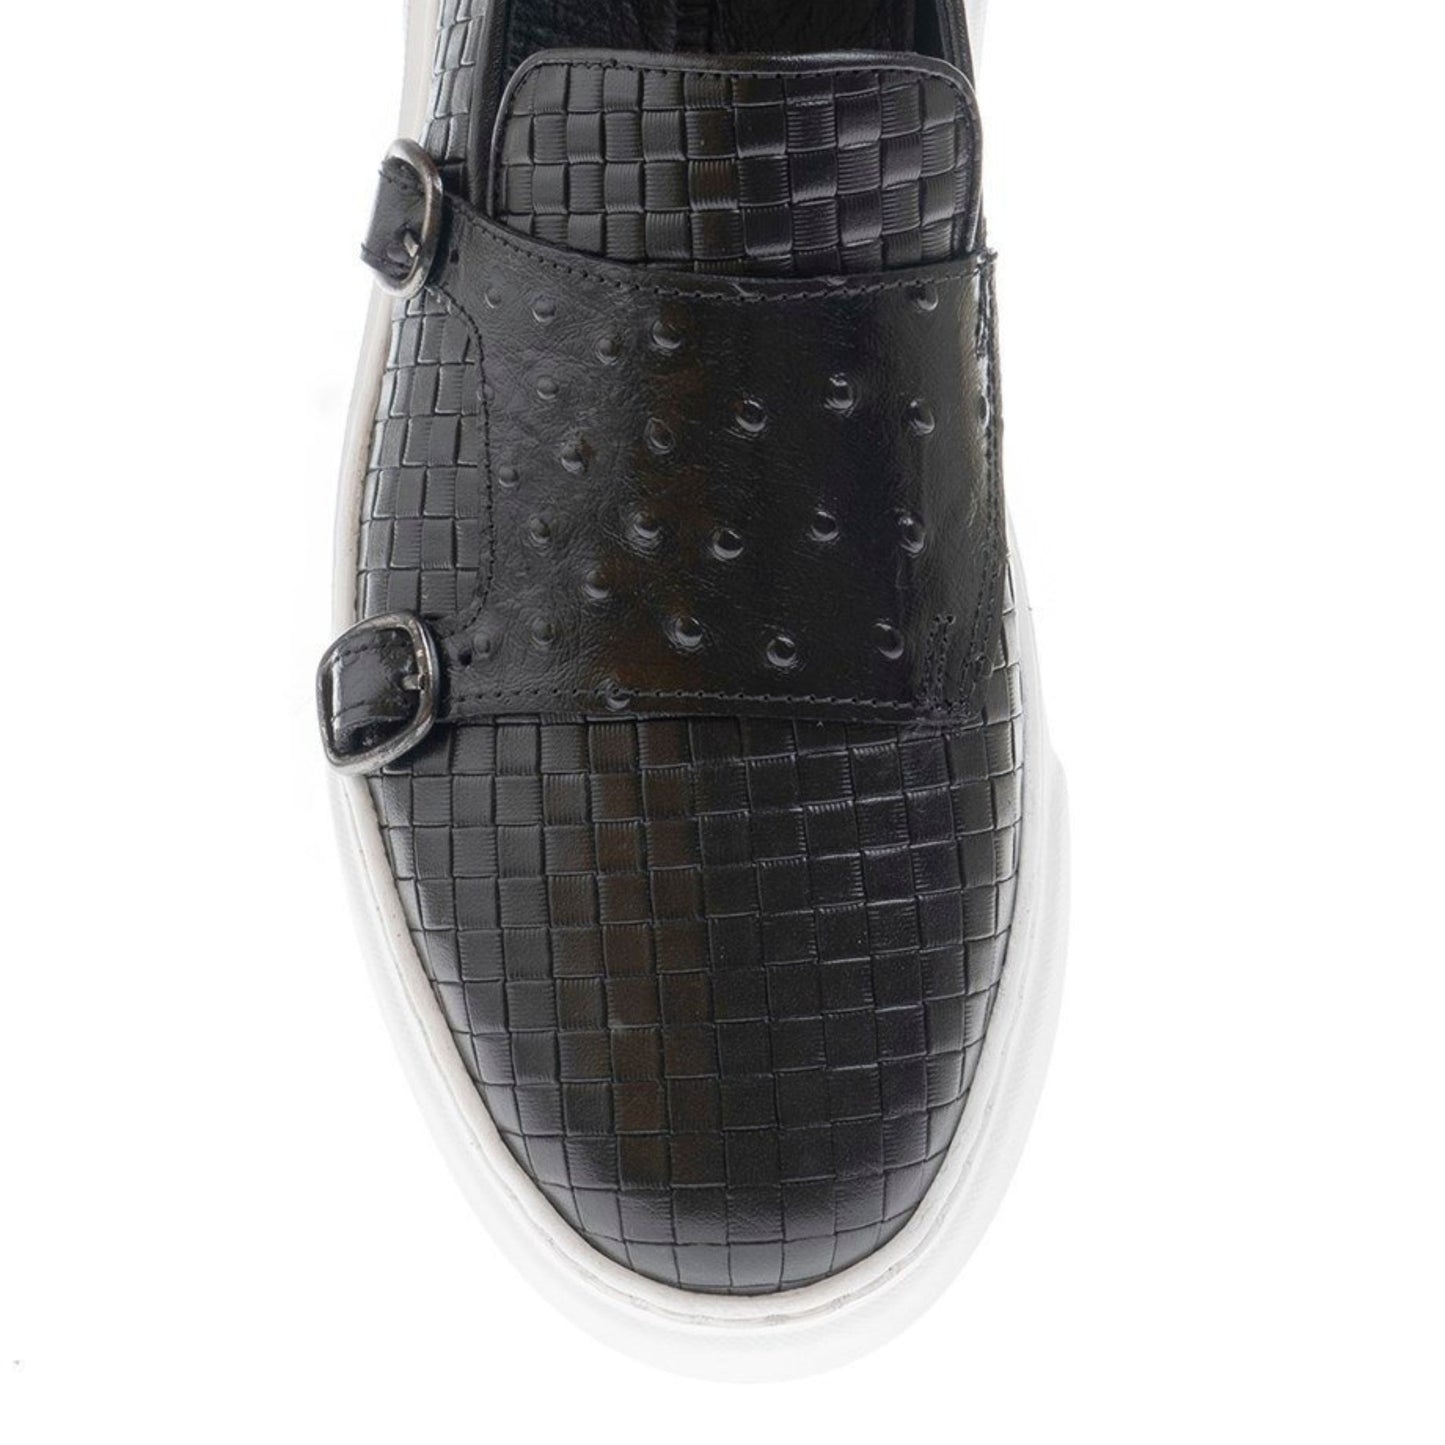 Madasat Black Leather Loafer - 597 |